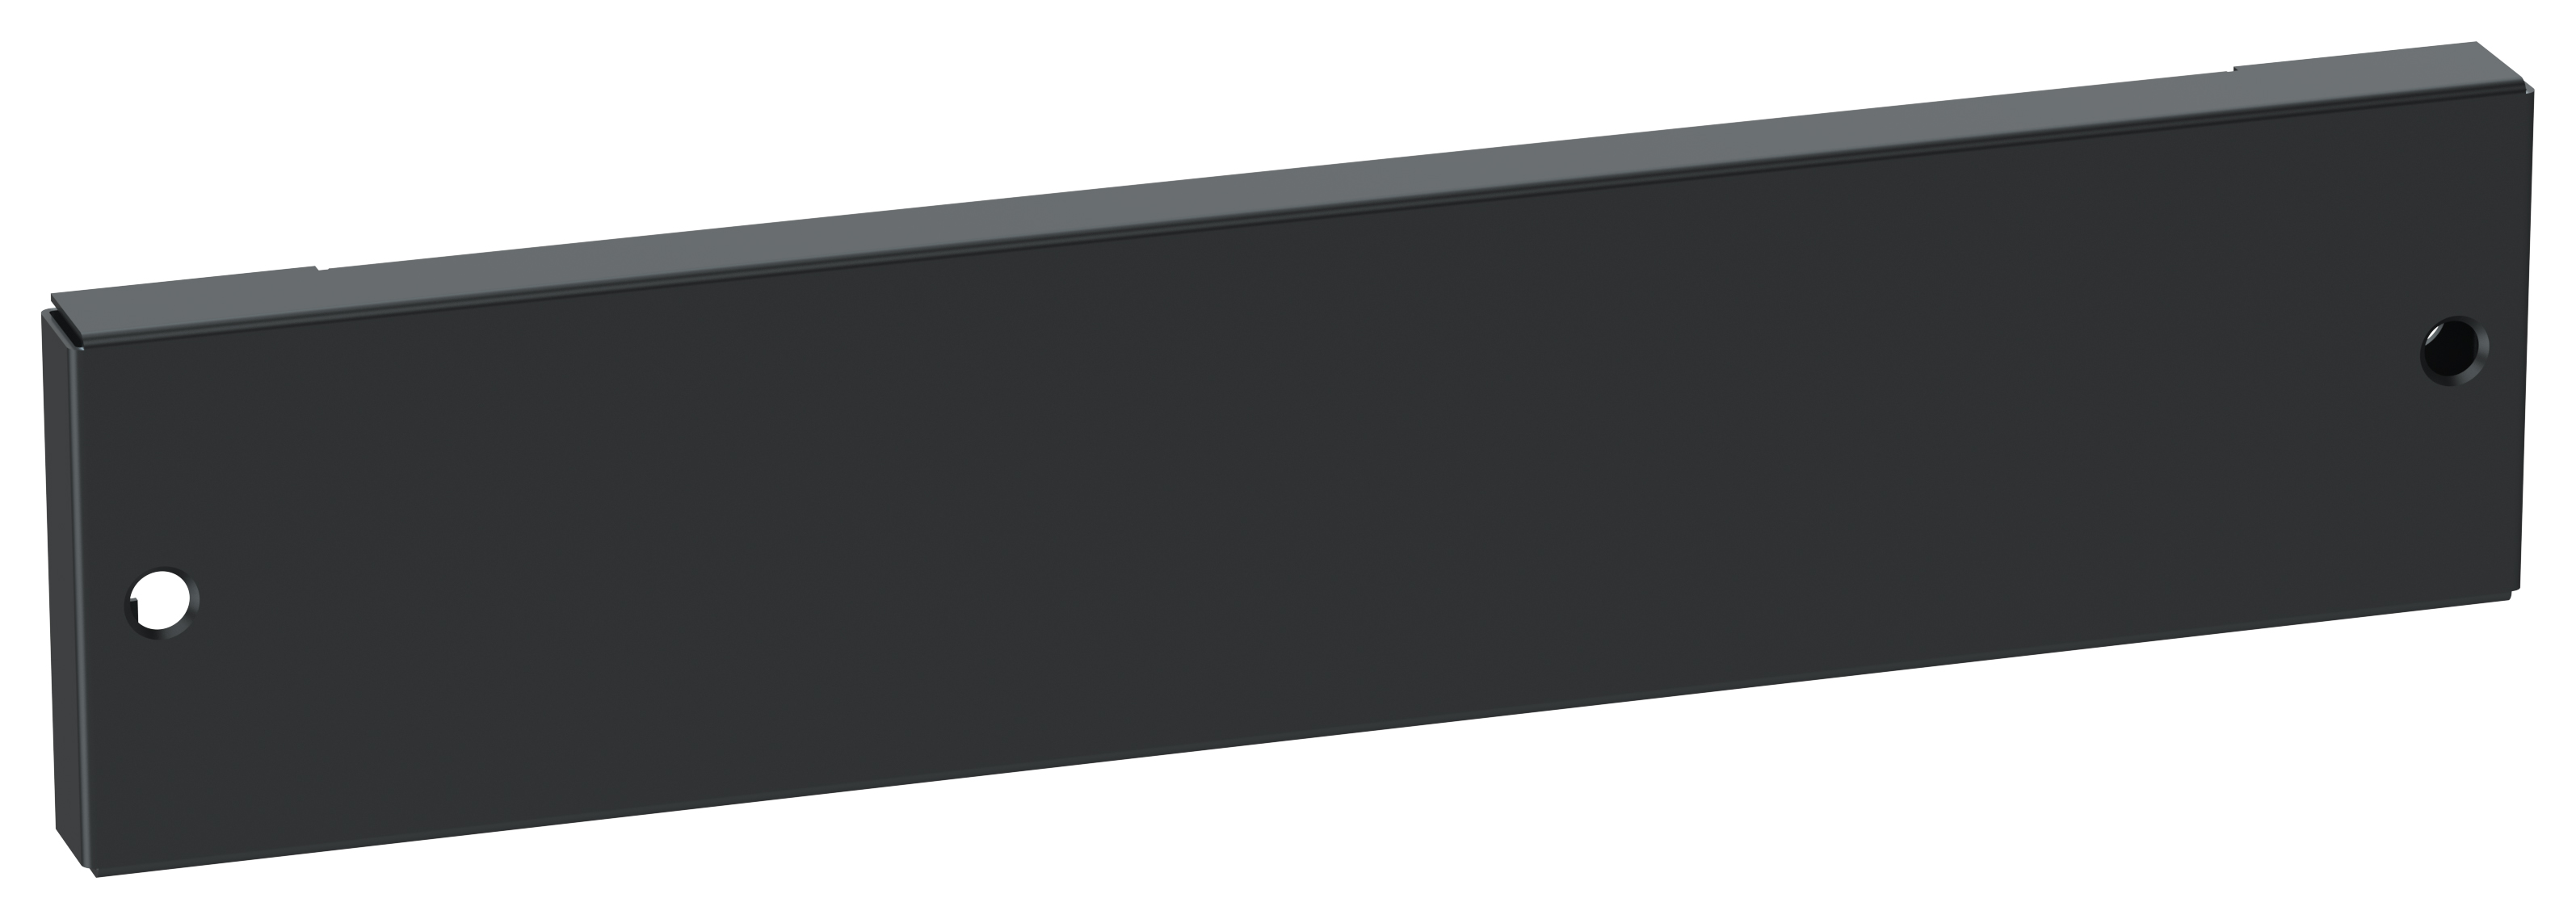 ITK LINEA S Панель сплошная цоколя 100х600мм черная